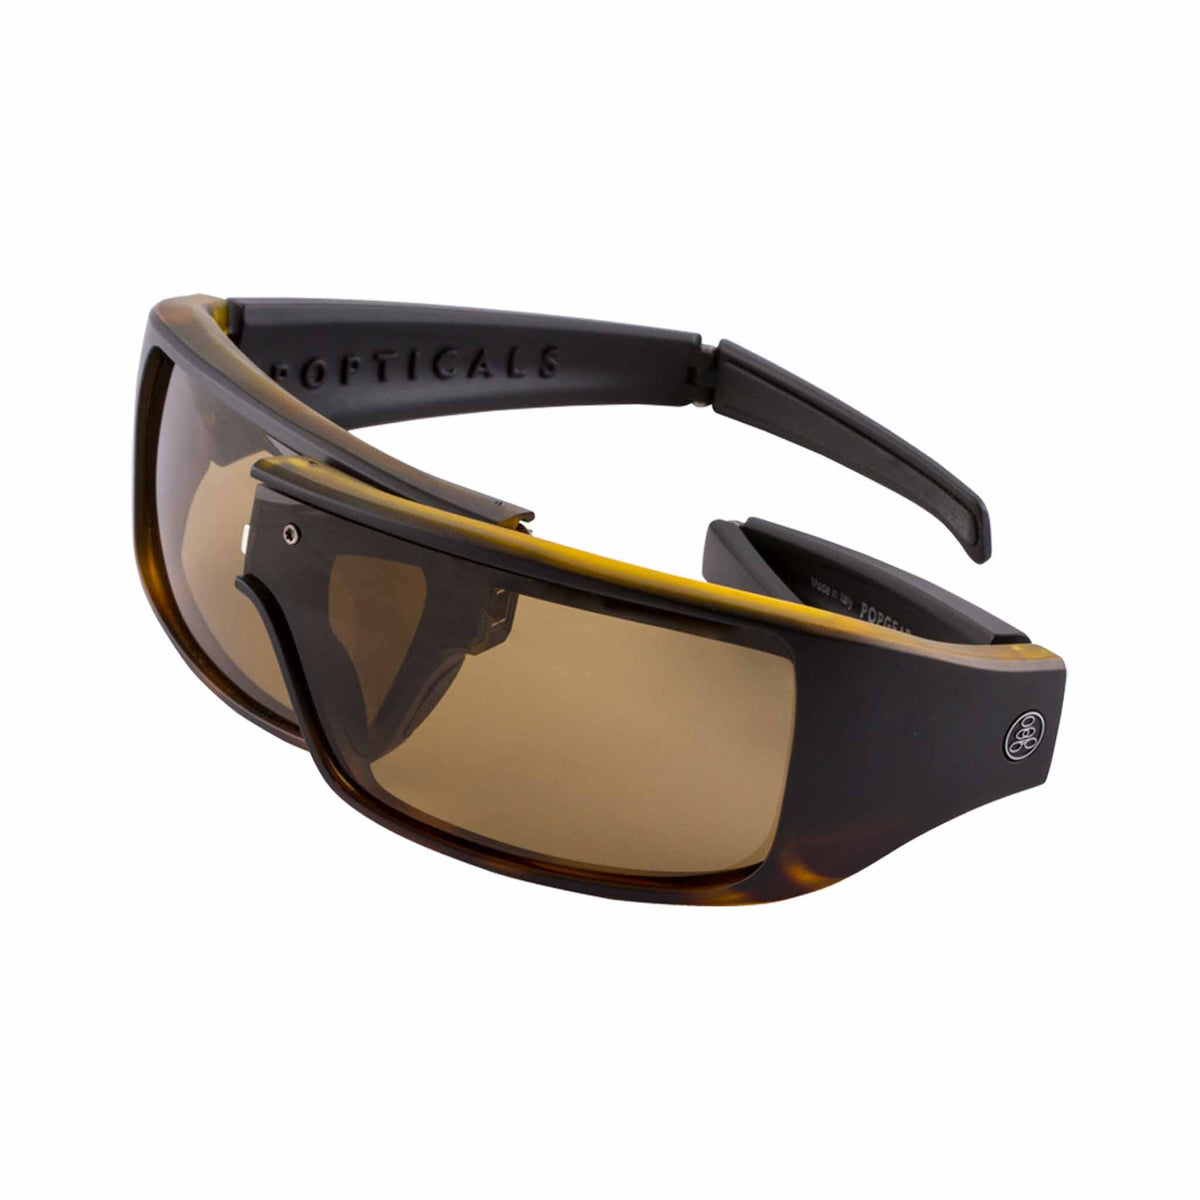 Popticals, Premium Compact Sunglasses, PopGear, 010050-AUNS, Standard Sunglasses, Matte Black Tortoise, Brown Lenses, Spider View